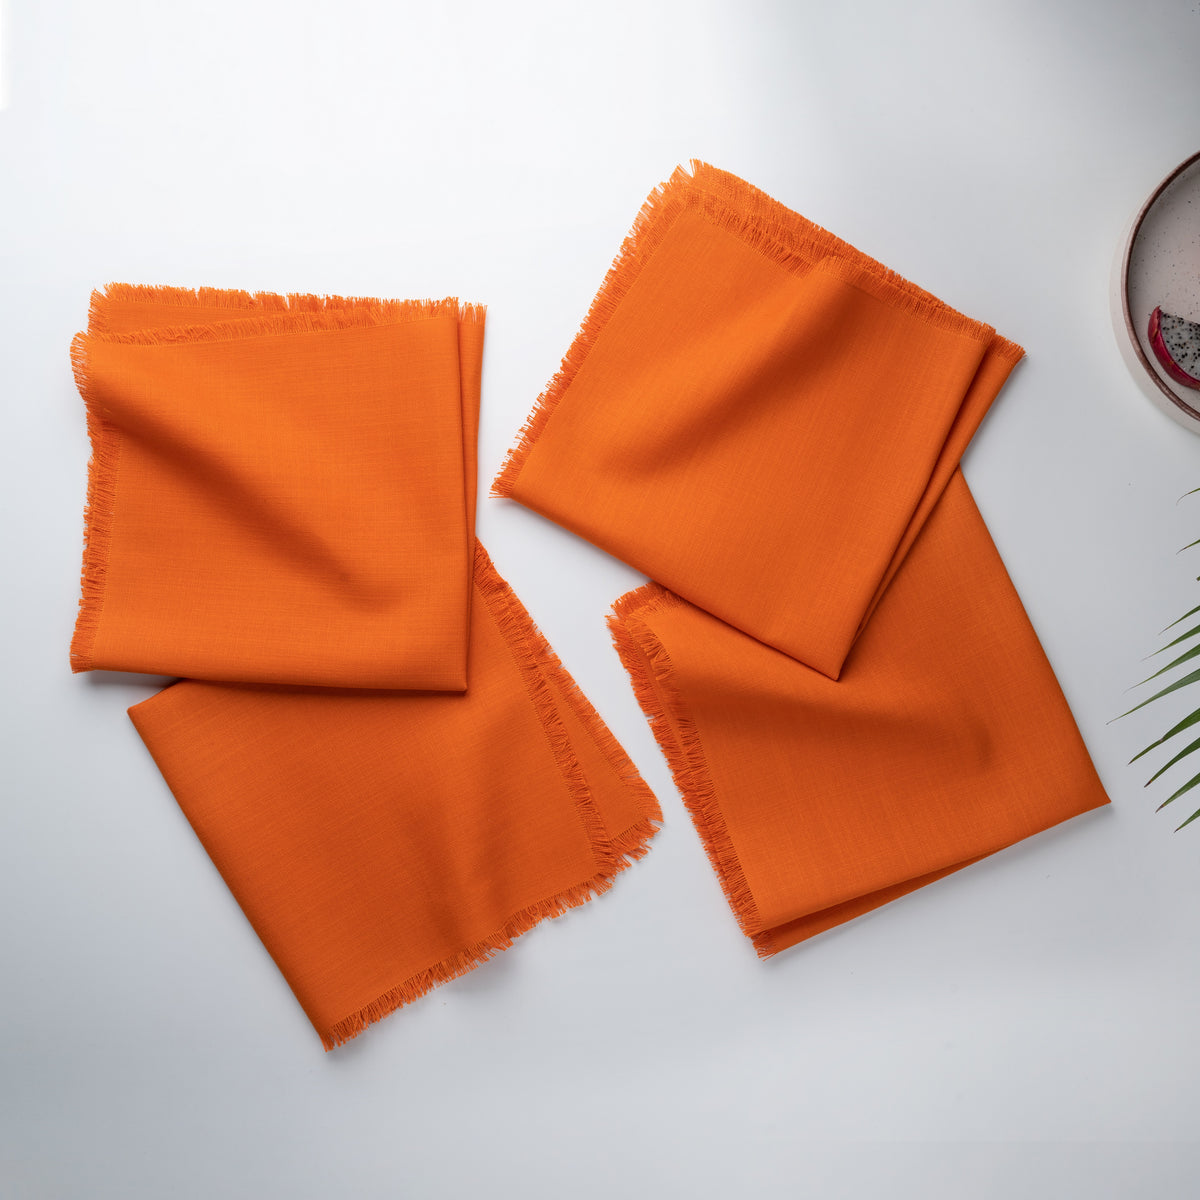 Orange Linen Textured Dinner Napkins 20 x 20 Inch Set of 4 - Fringe